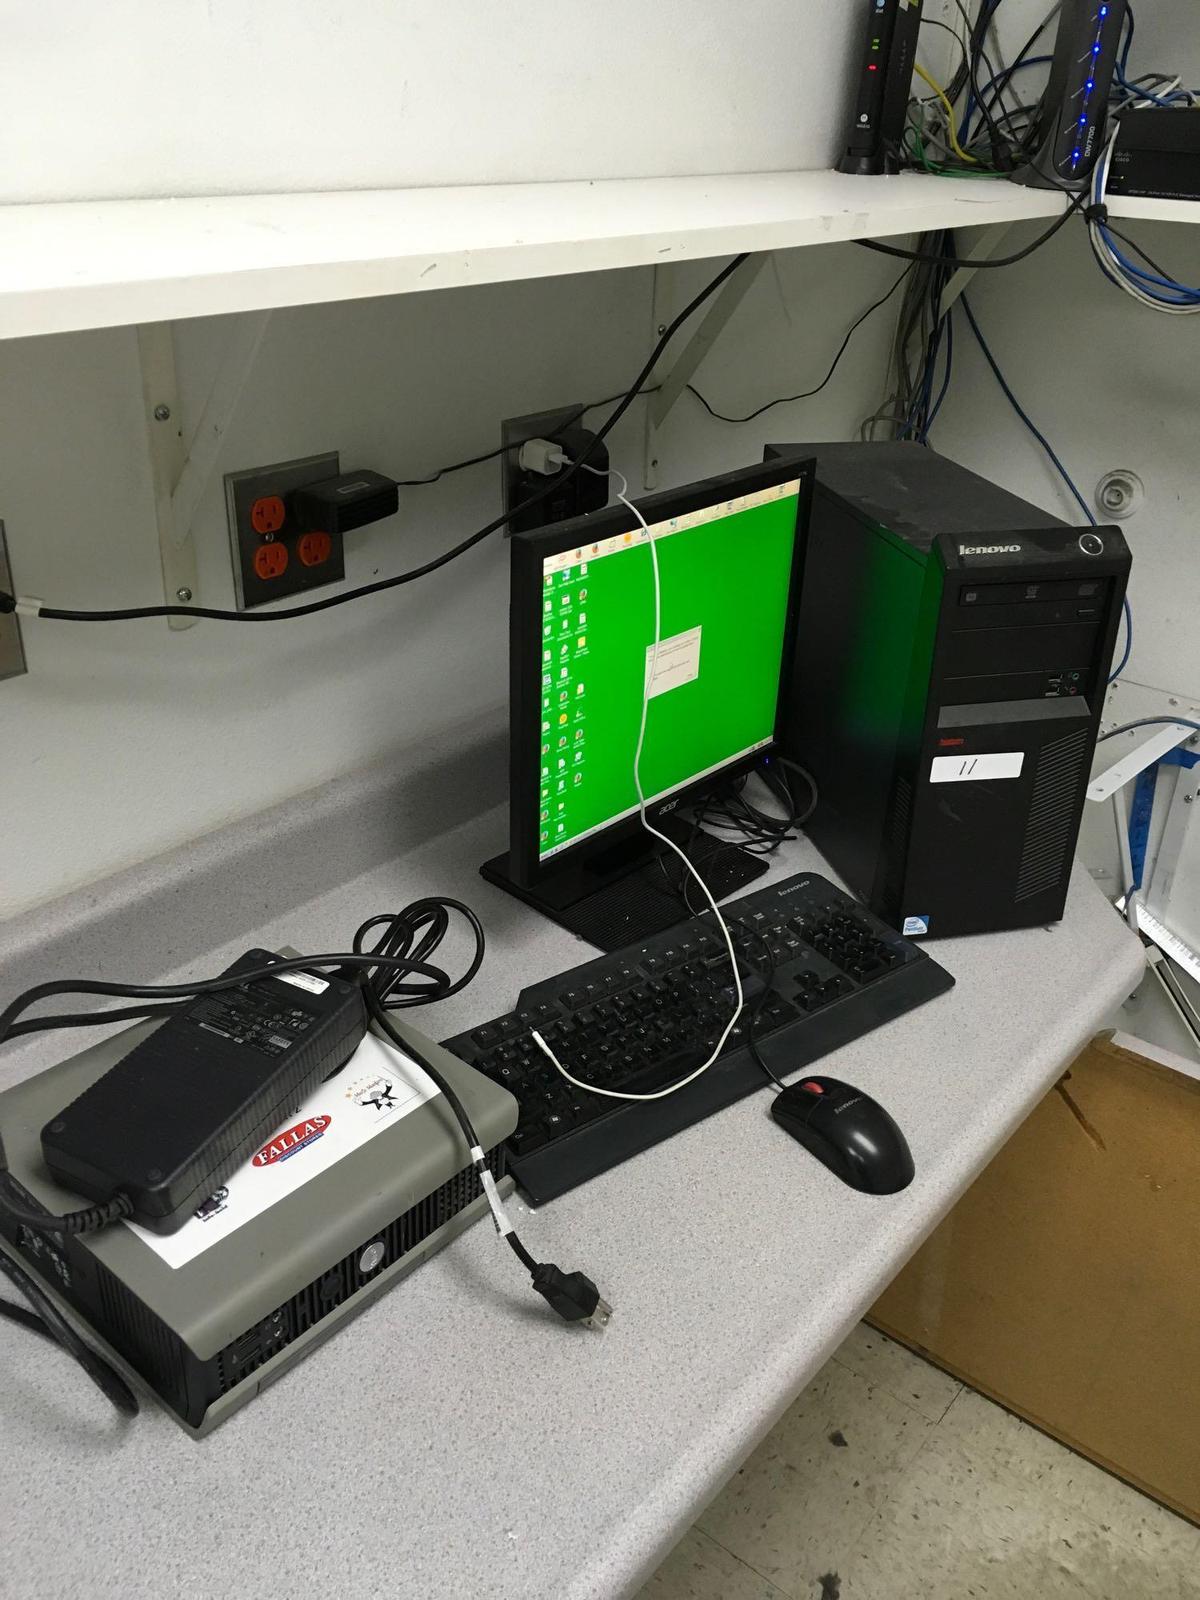 Lenovo computer system